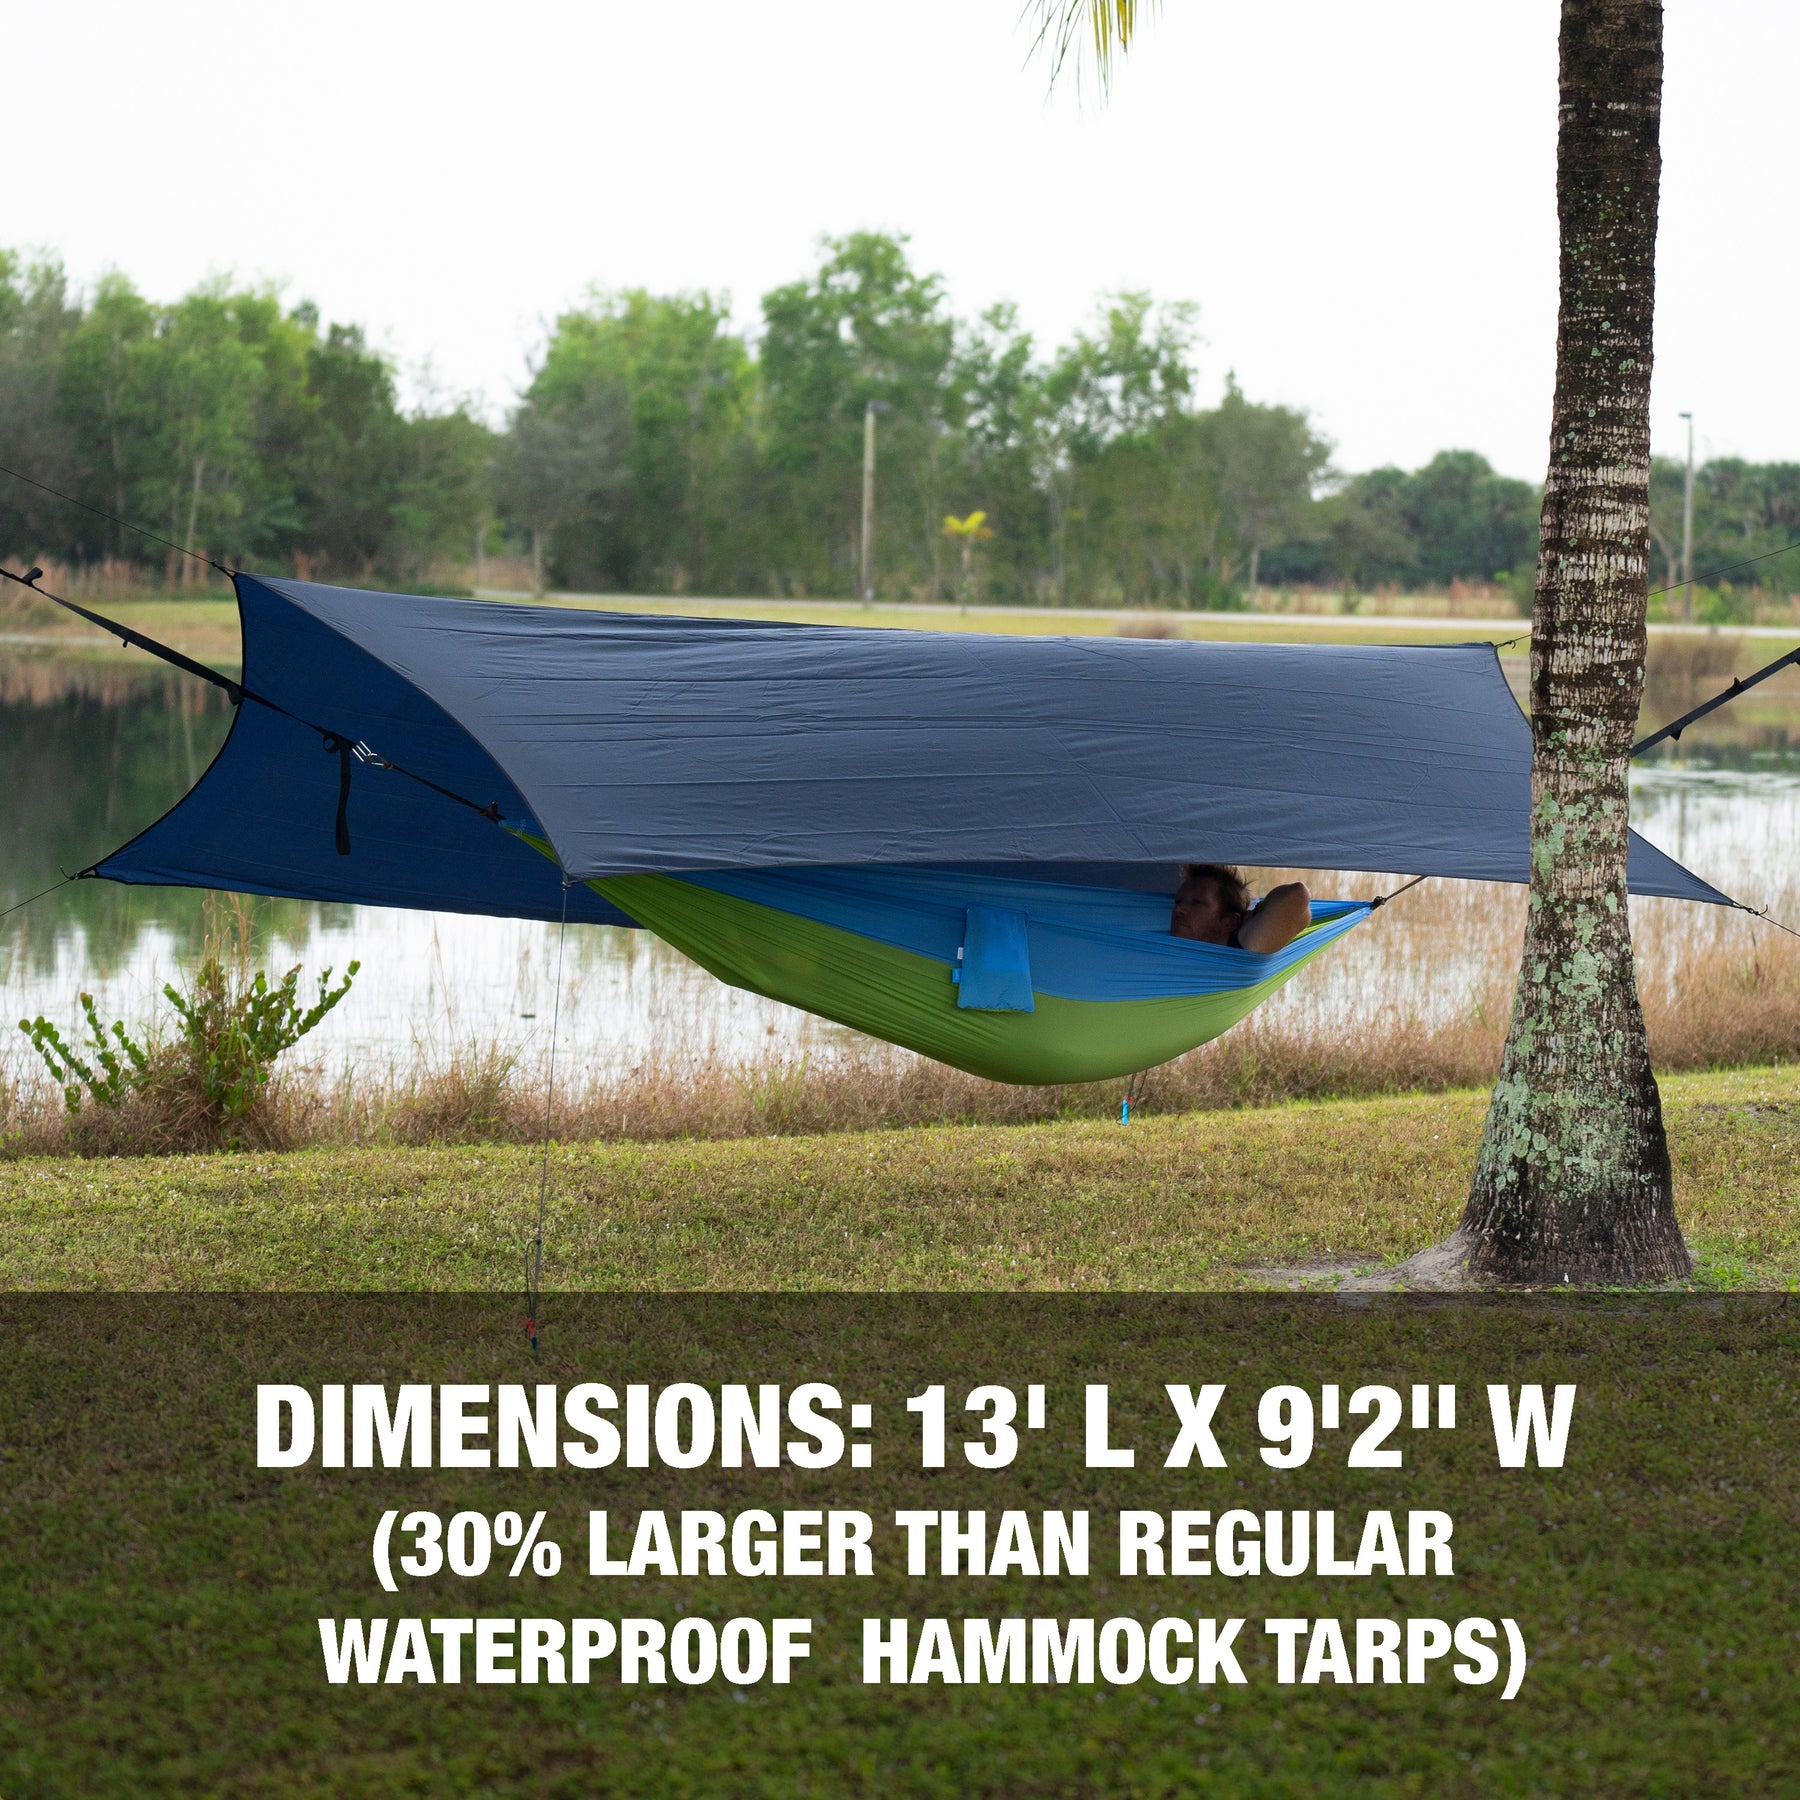 Dimensions: 13 feet long, 9 feet and 2 inches wide. 30 percent larger than regular waterproof hammock tarps.